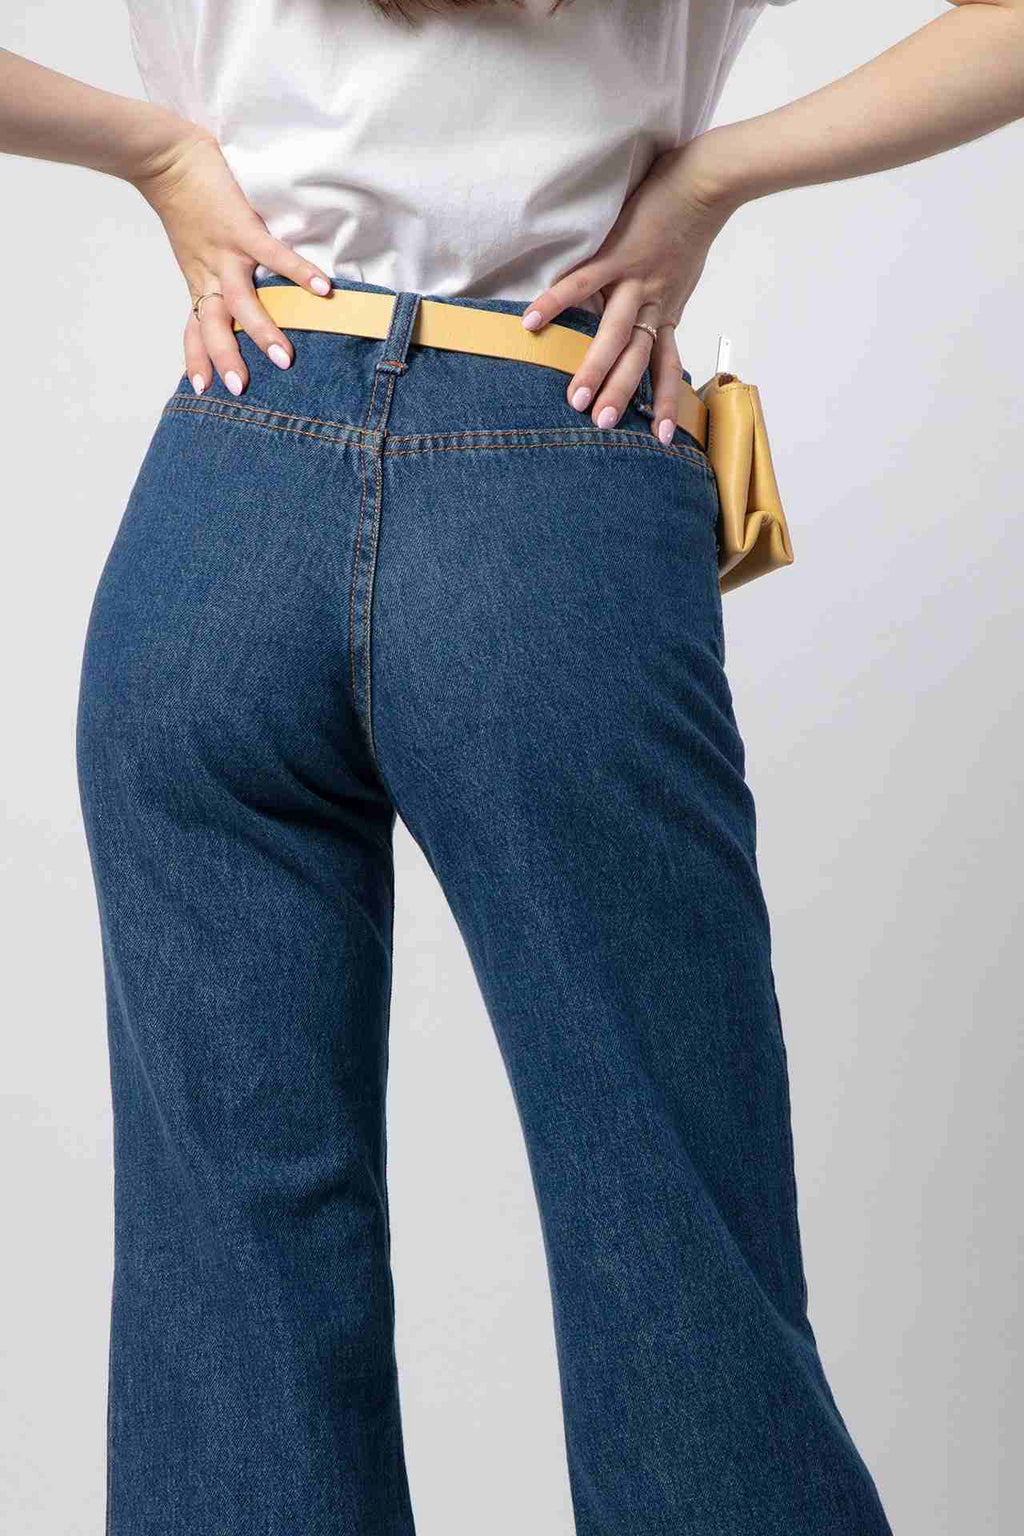 Women's Bell Bottoms Jeans - Bustins Jeans